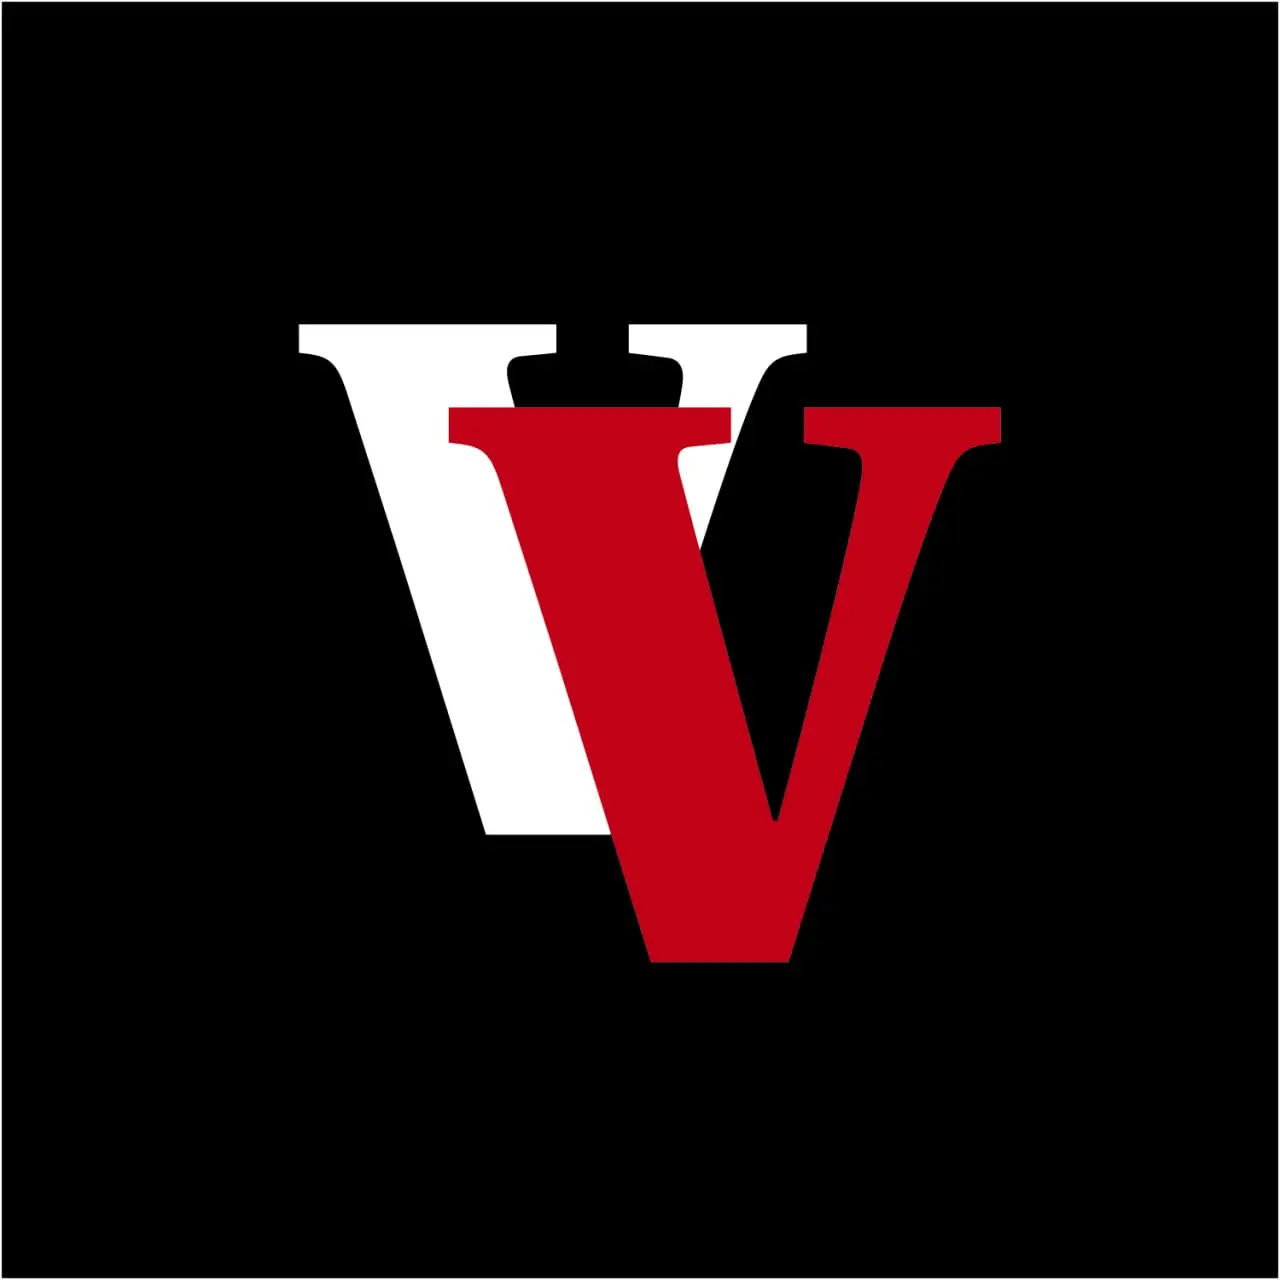 C de v v. Логотип VV. Логотип с буквой v. VV. Логотип аббревиатура.